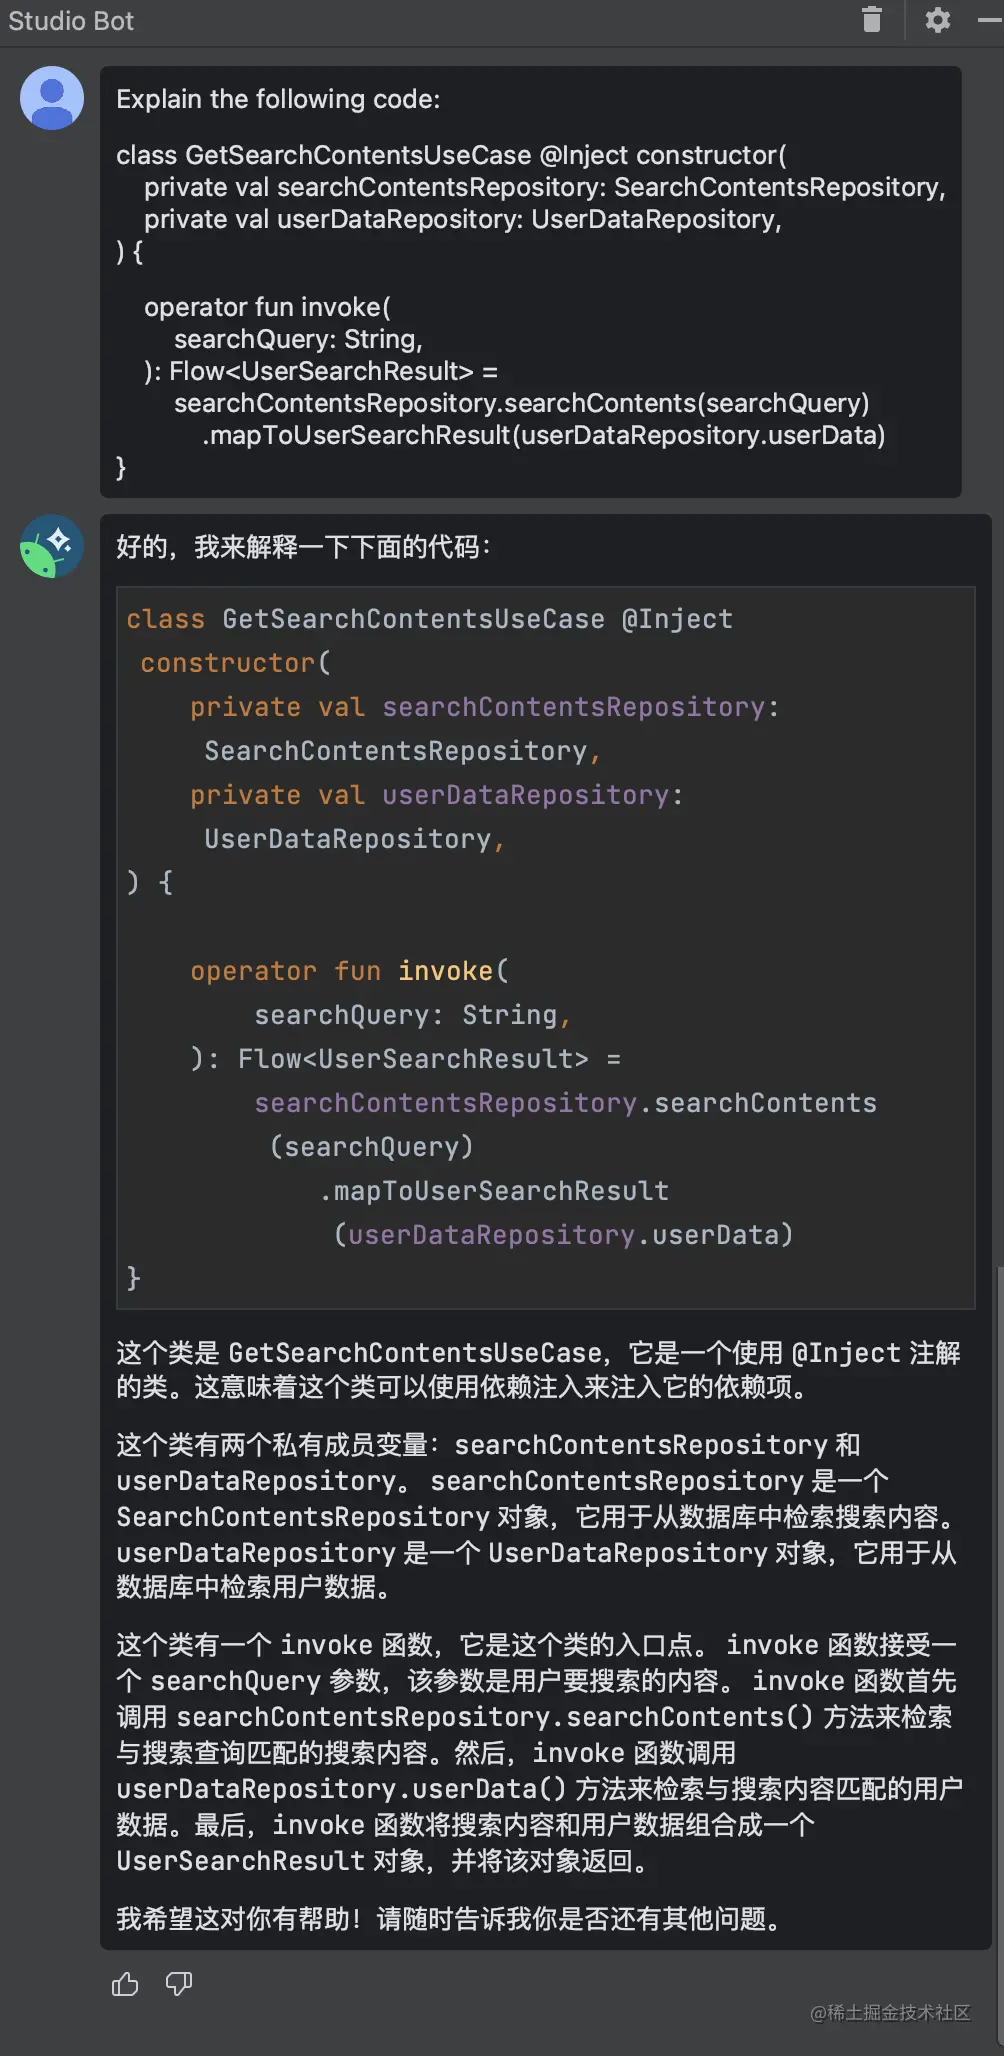 Studio Bot - 让 AI 帮我写 Android 代码_开发者_09